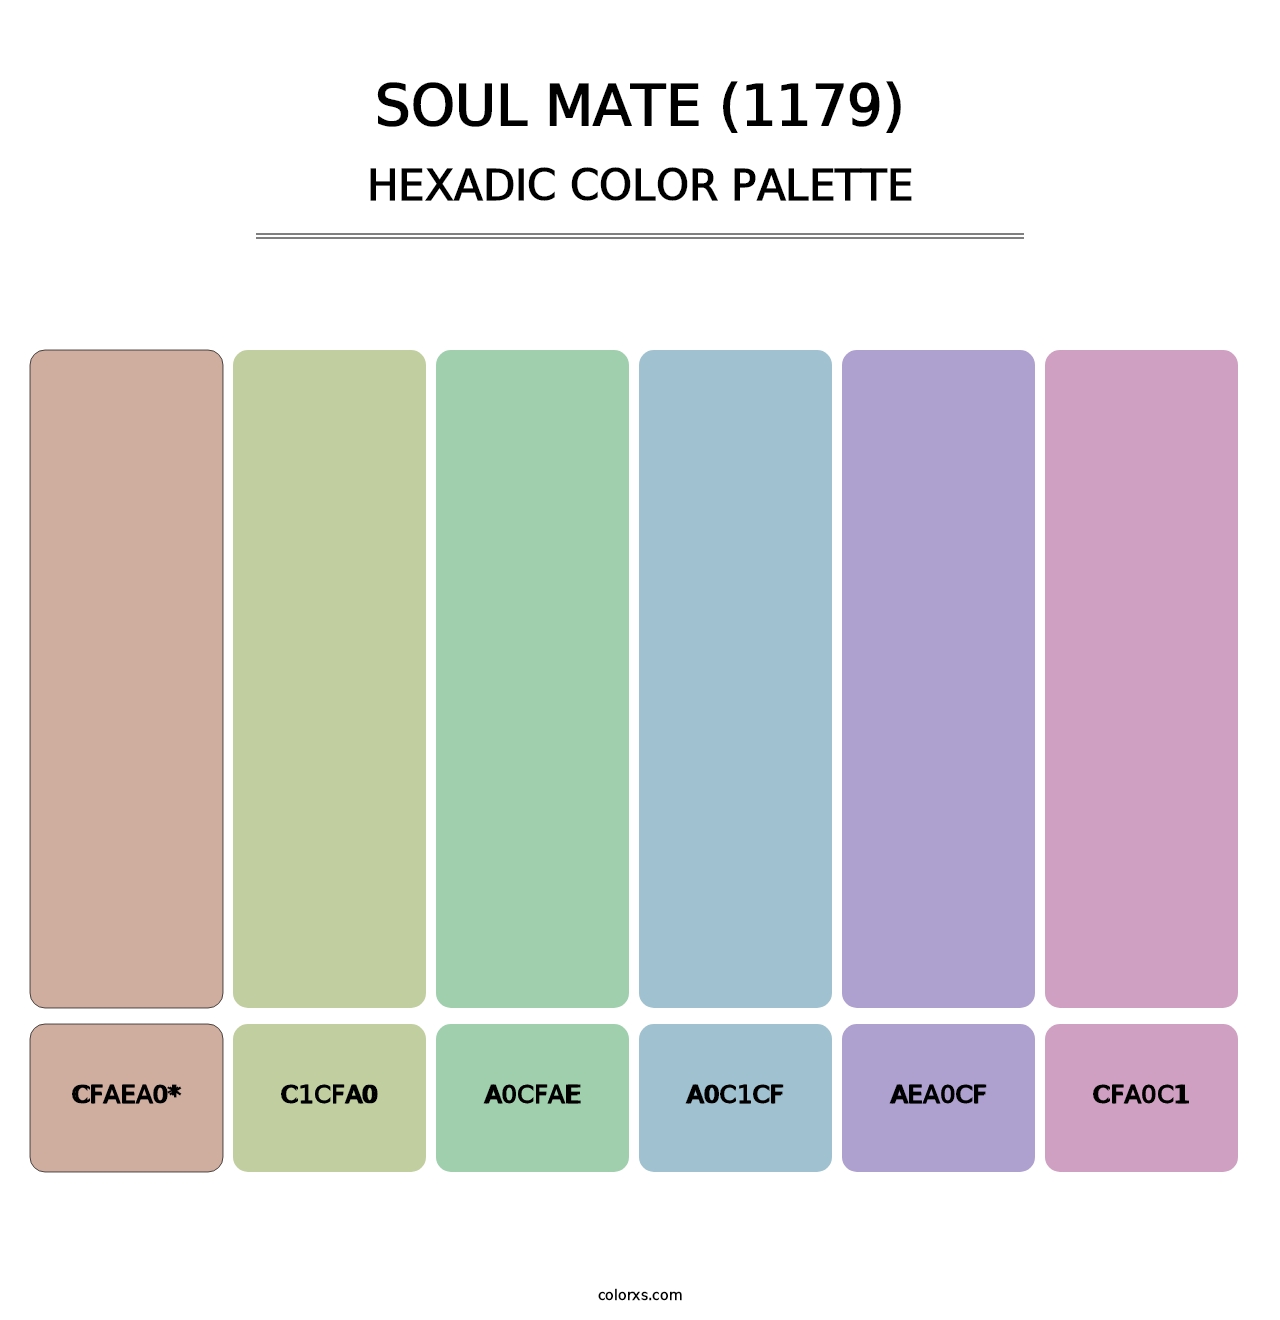 Soul Mate (1179) - Hexadic Color Palette